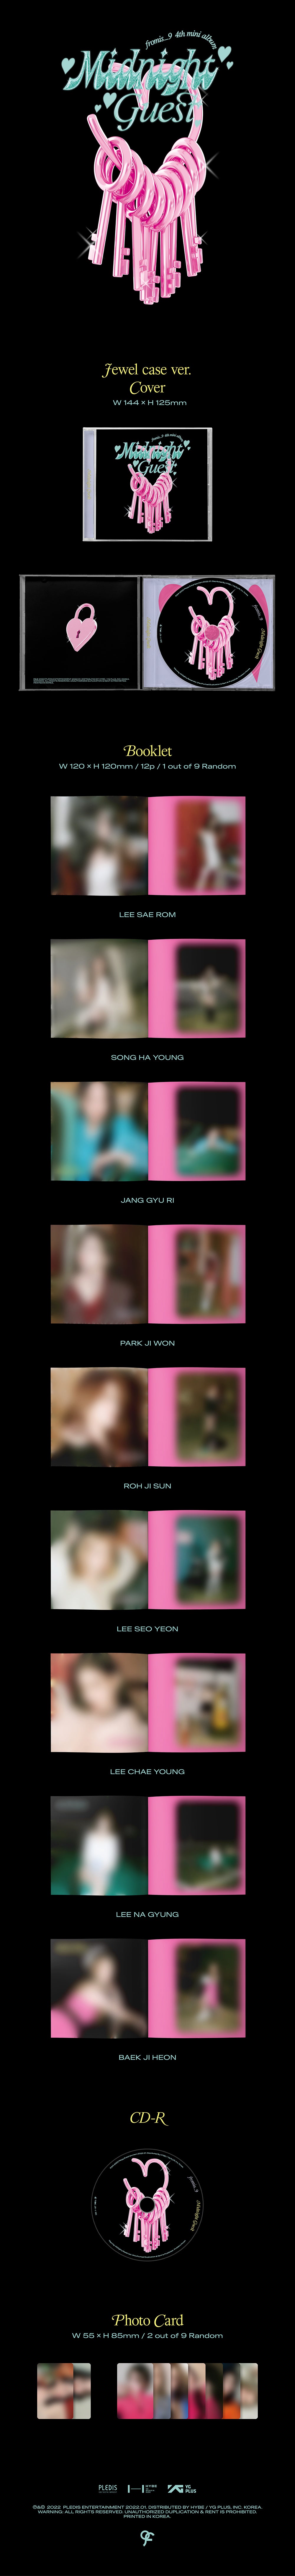 Fromis 9 - Midnight Guest (4to mini álbum) (Jewel Case Ver.)